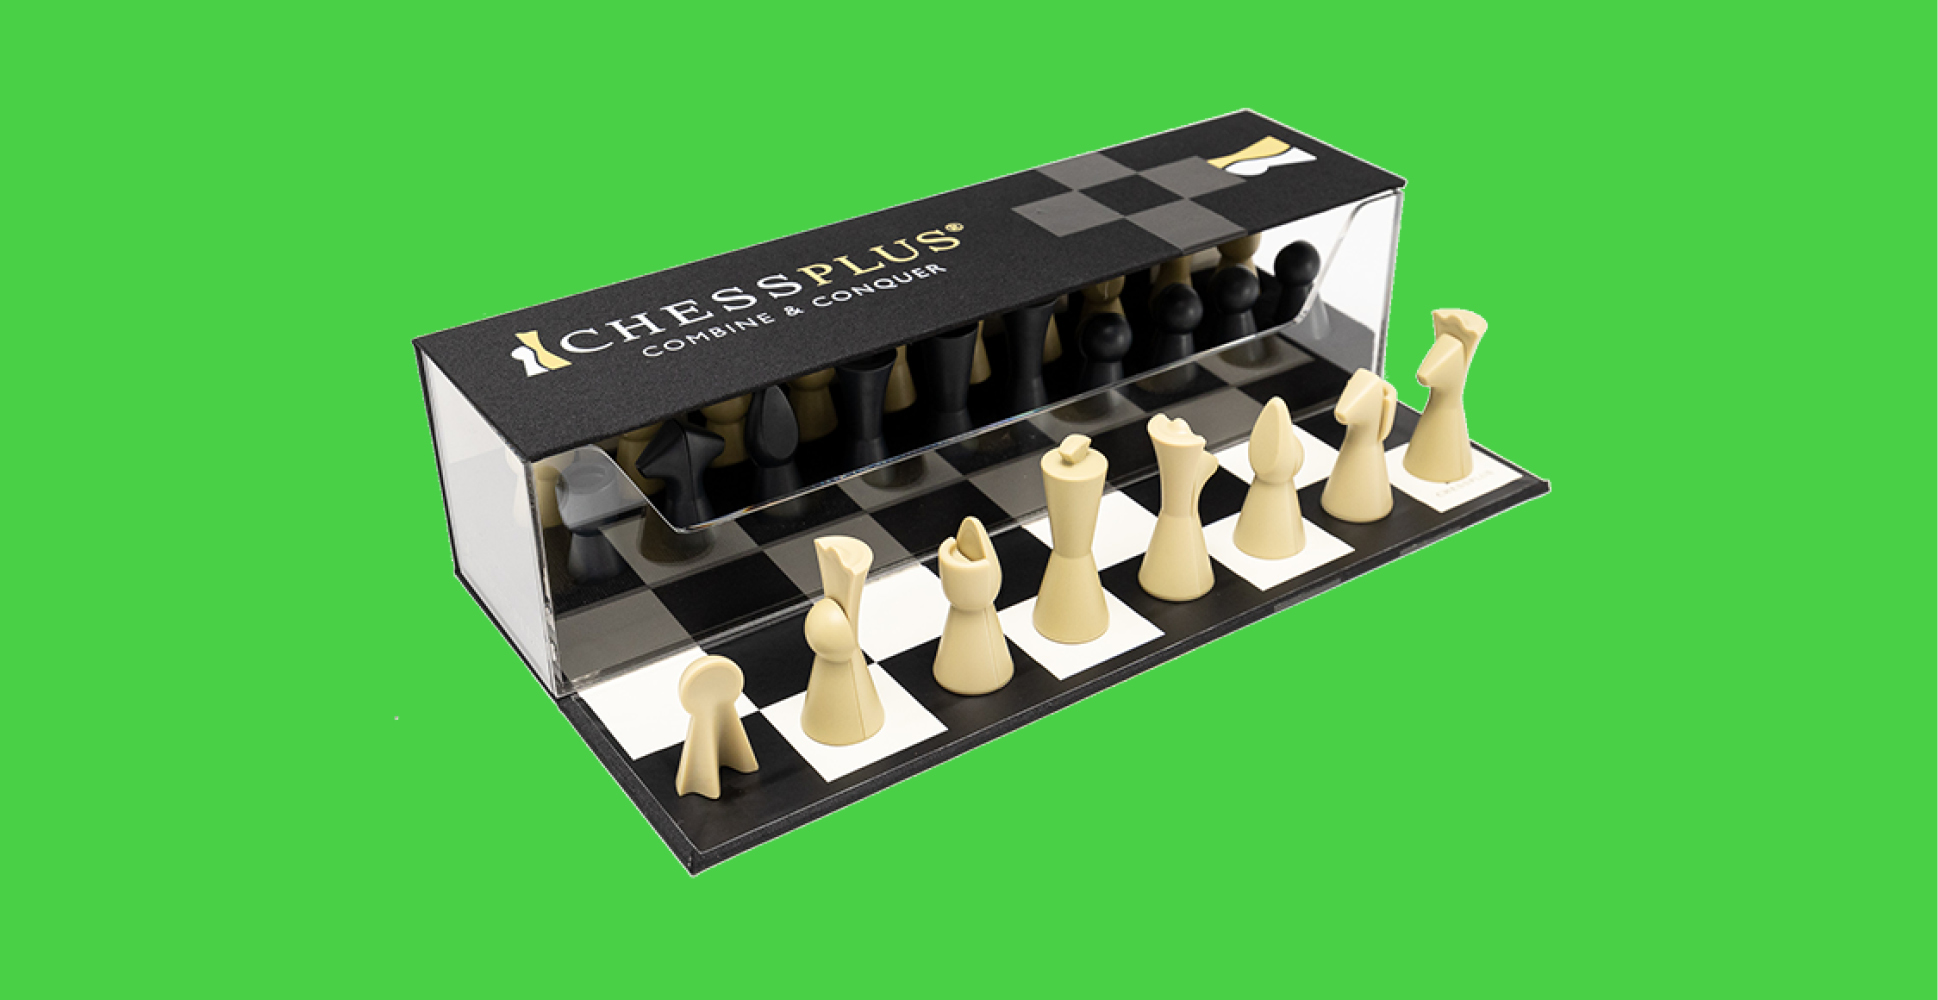 Interactive Games – ChessPlus